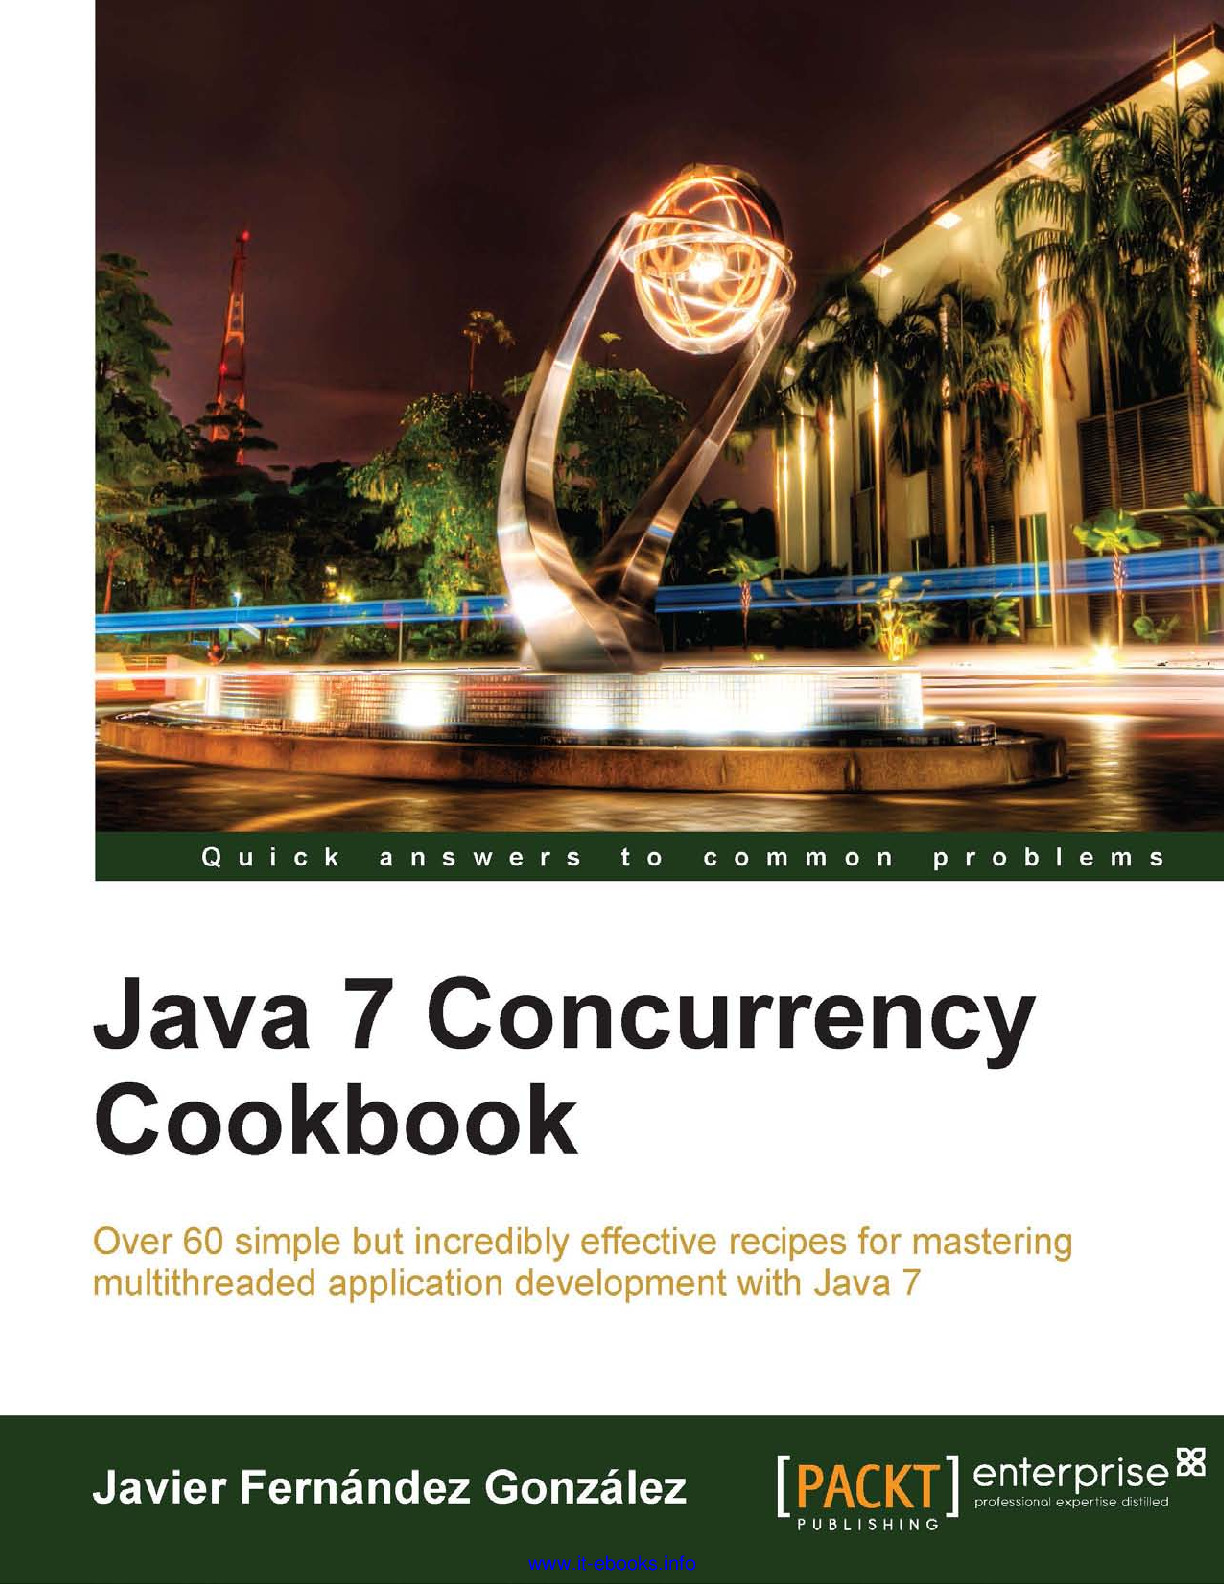 [JAVA][Java 7 Concurrency Cookbook]